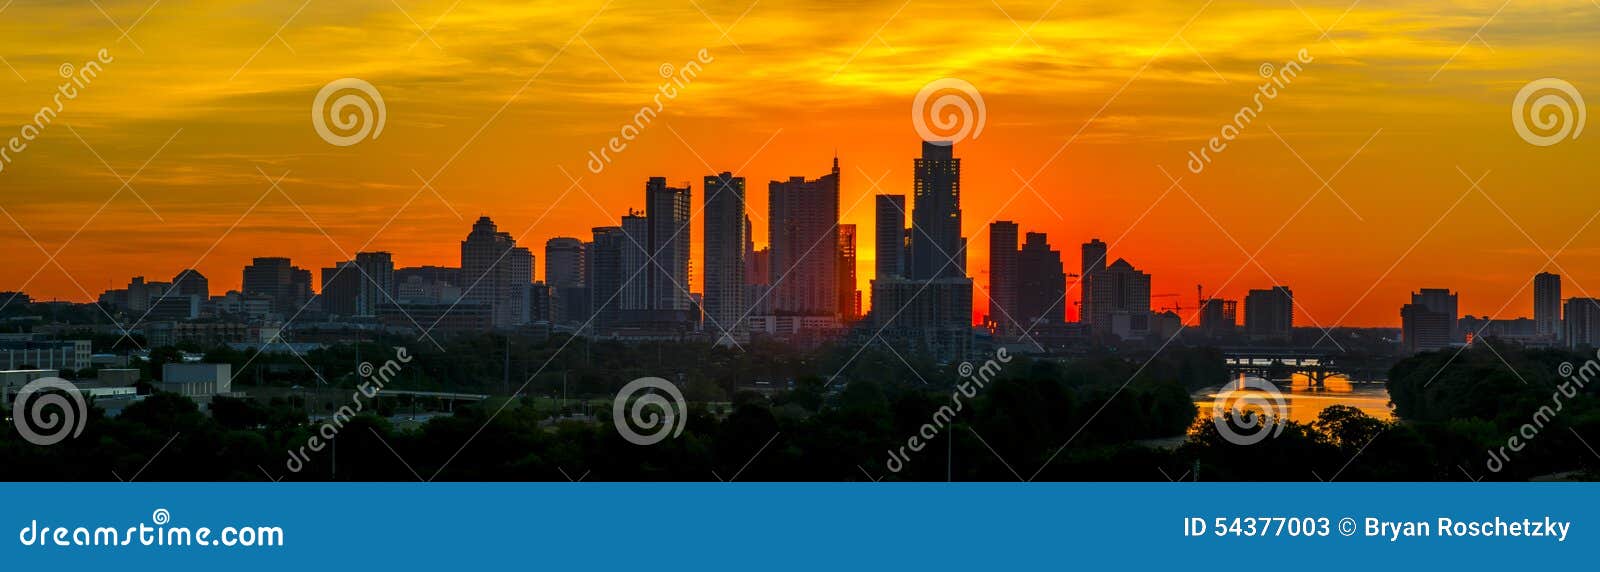 austin texas downtown sun rise silhouette towers panoramic